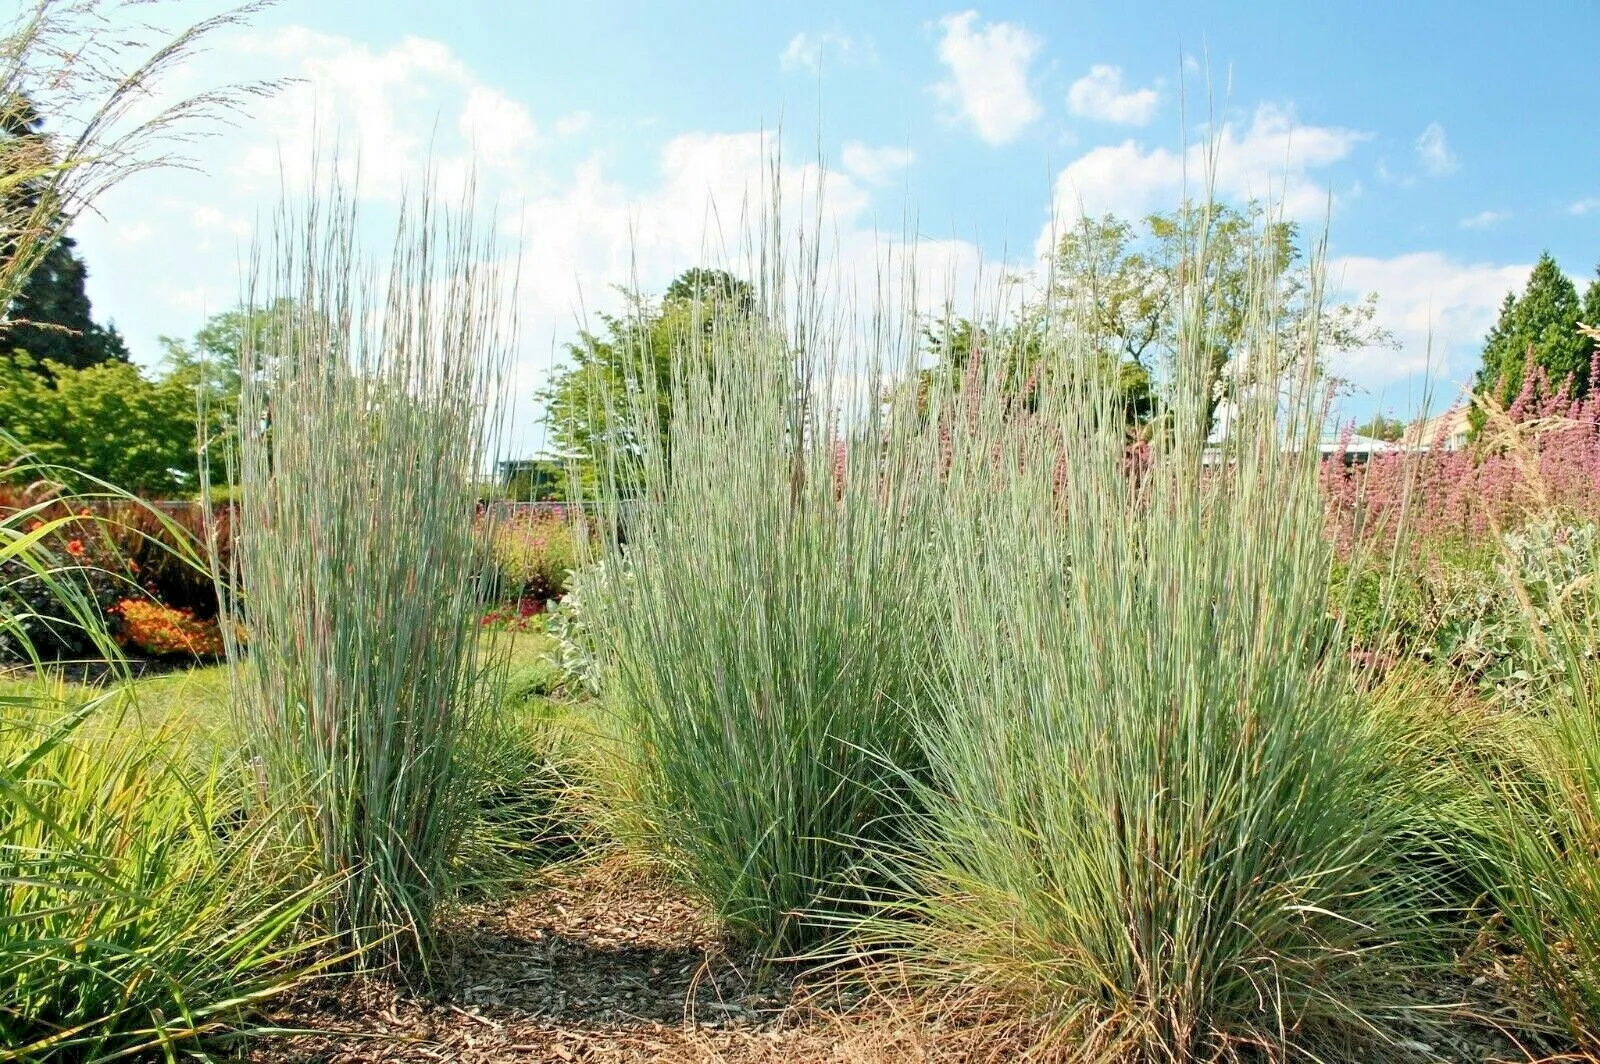 501 Big Bluestem Seeds Native Tall Grass Prairie Ornamental Drought Heat... - $9.41